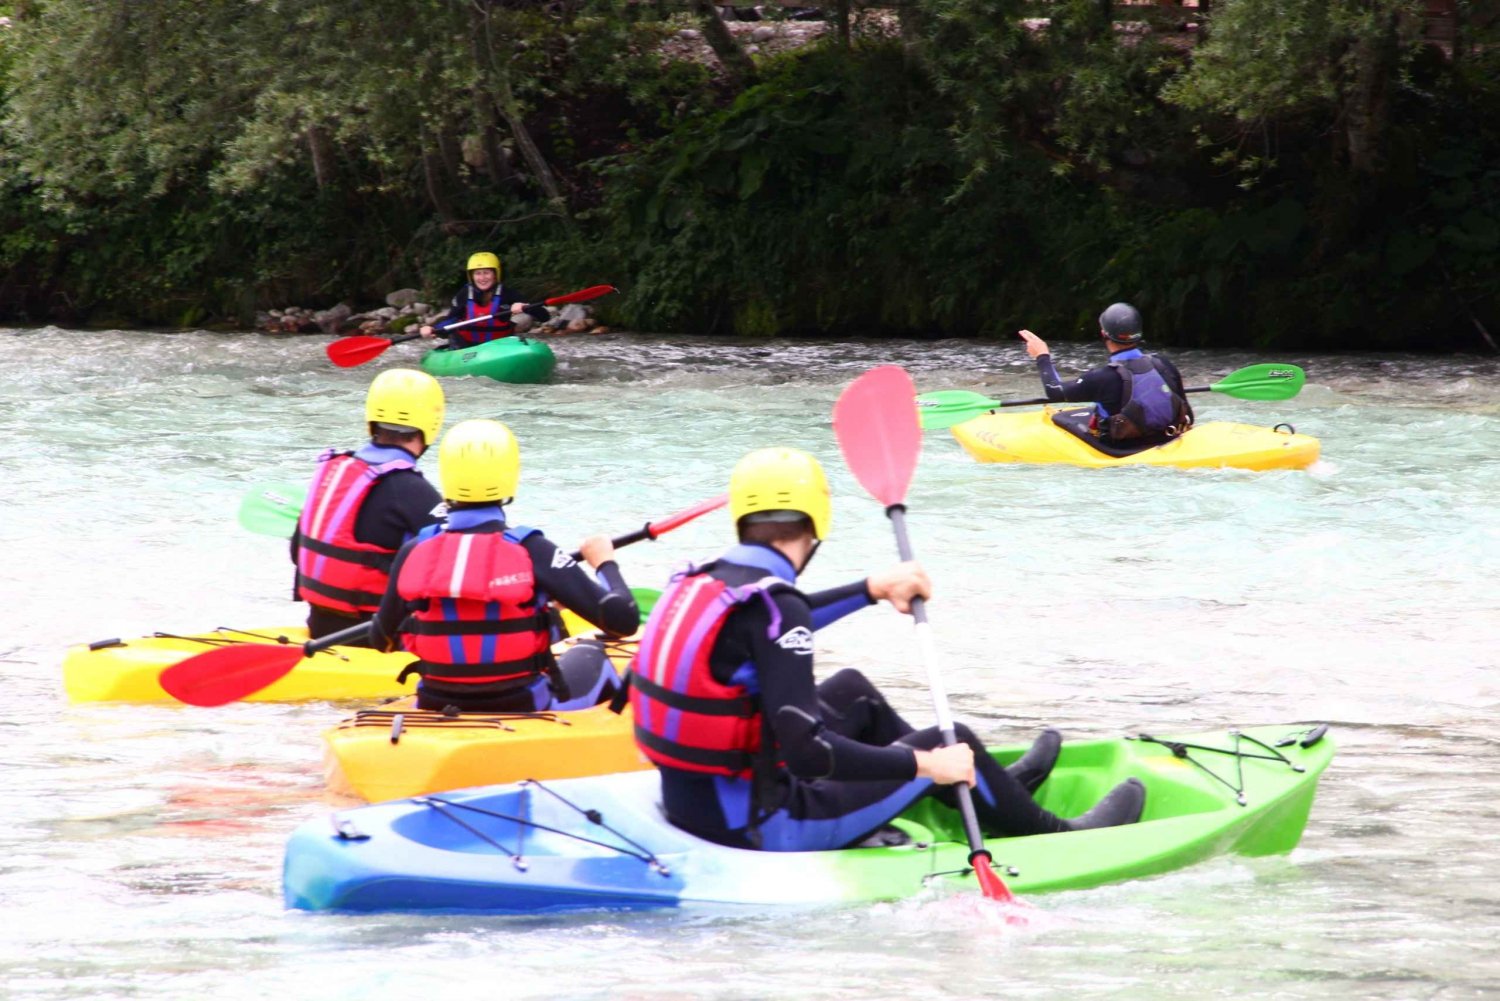 Soča: Kayaking on the Soča River Experience